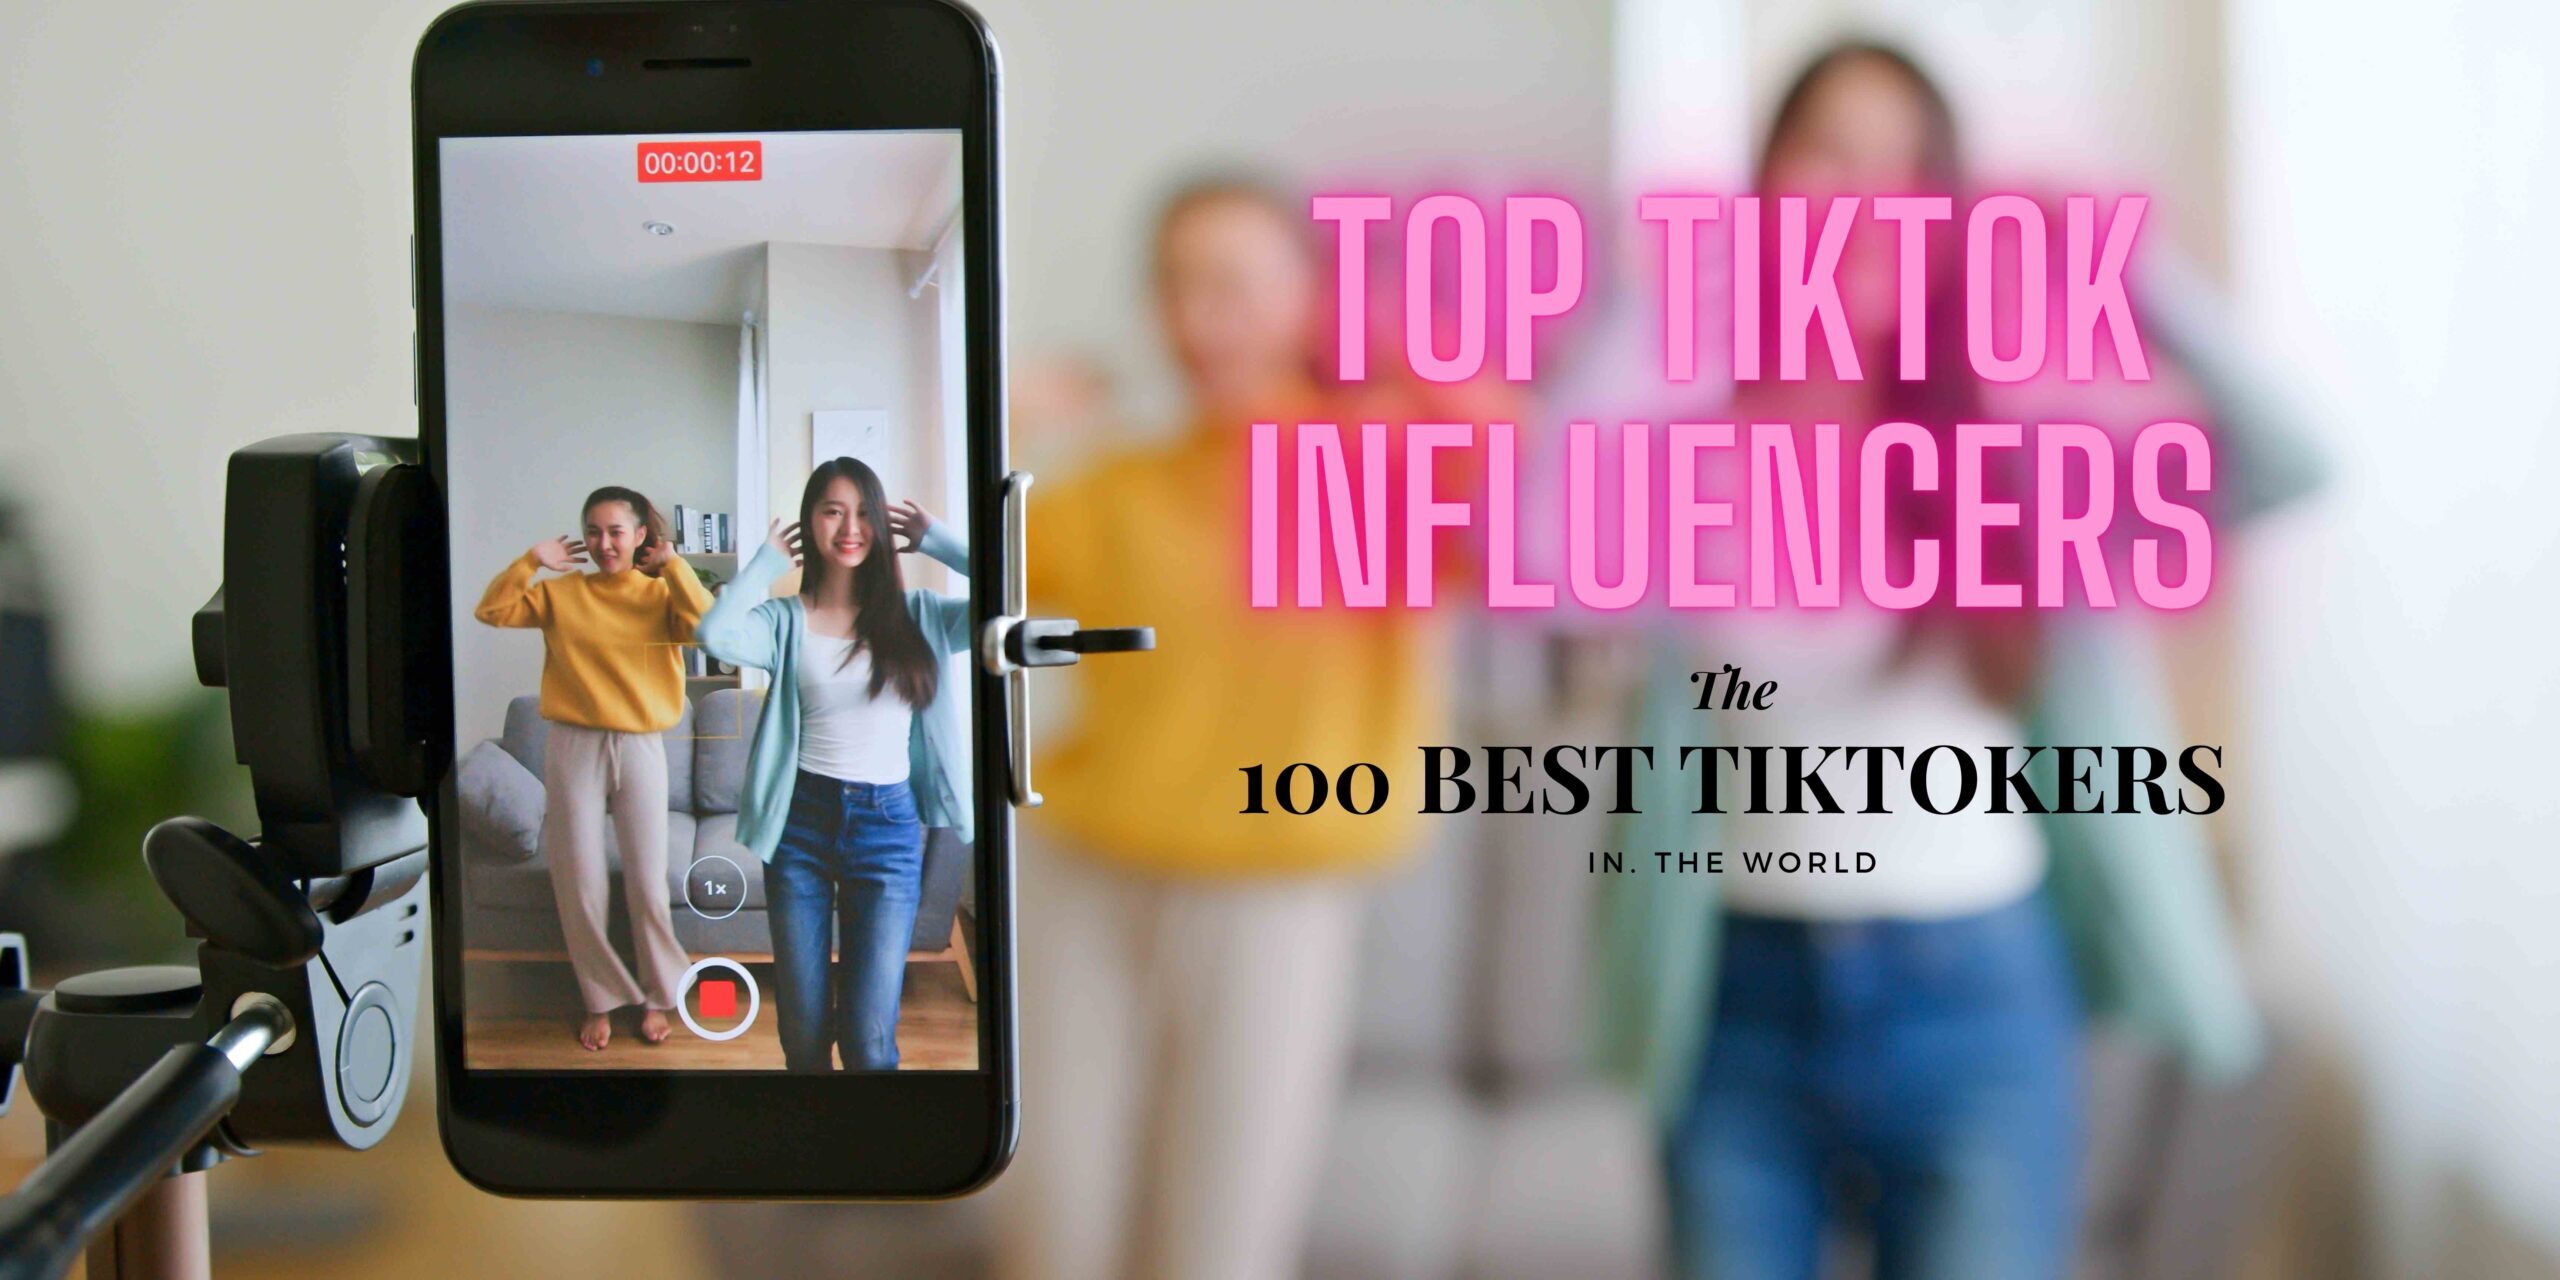 TikTok Influencers and Best TikTokers